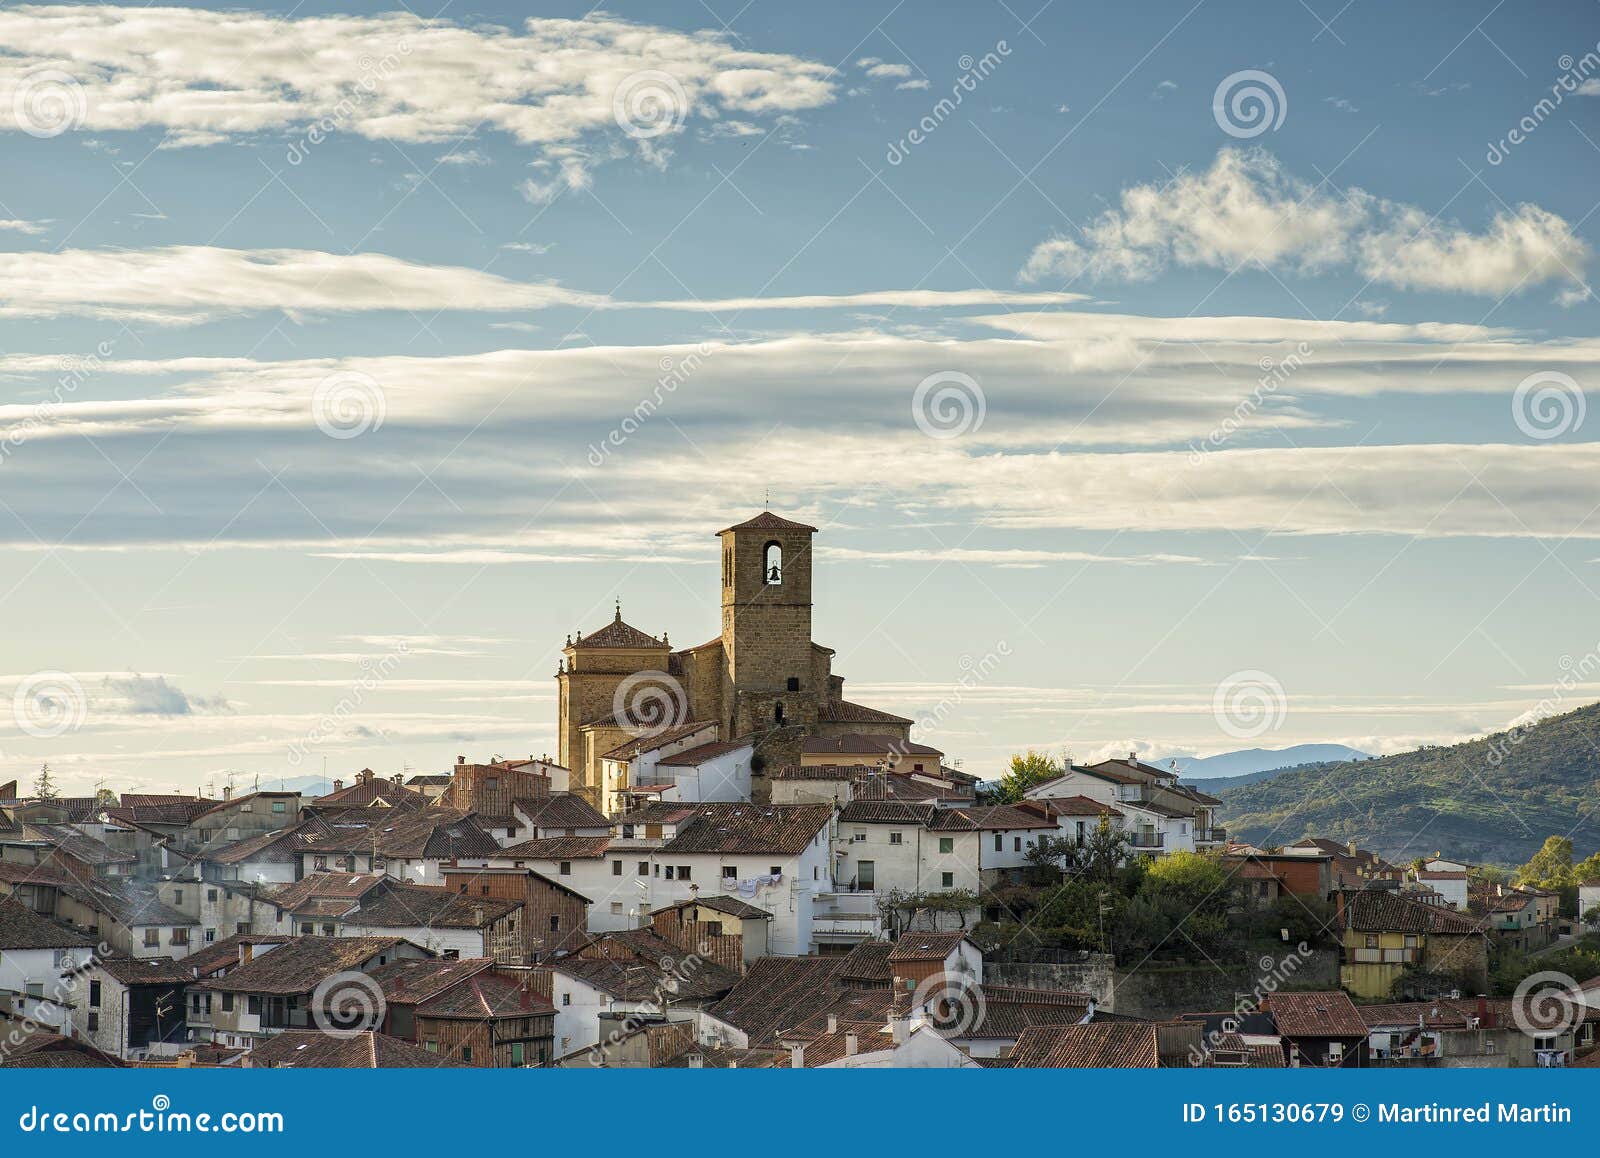 hervas church, town of valle del ambroz in extremadura, spain